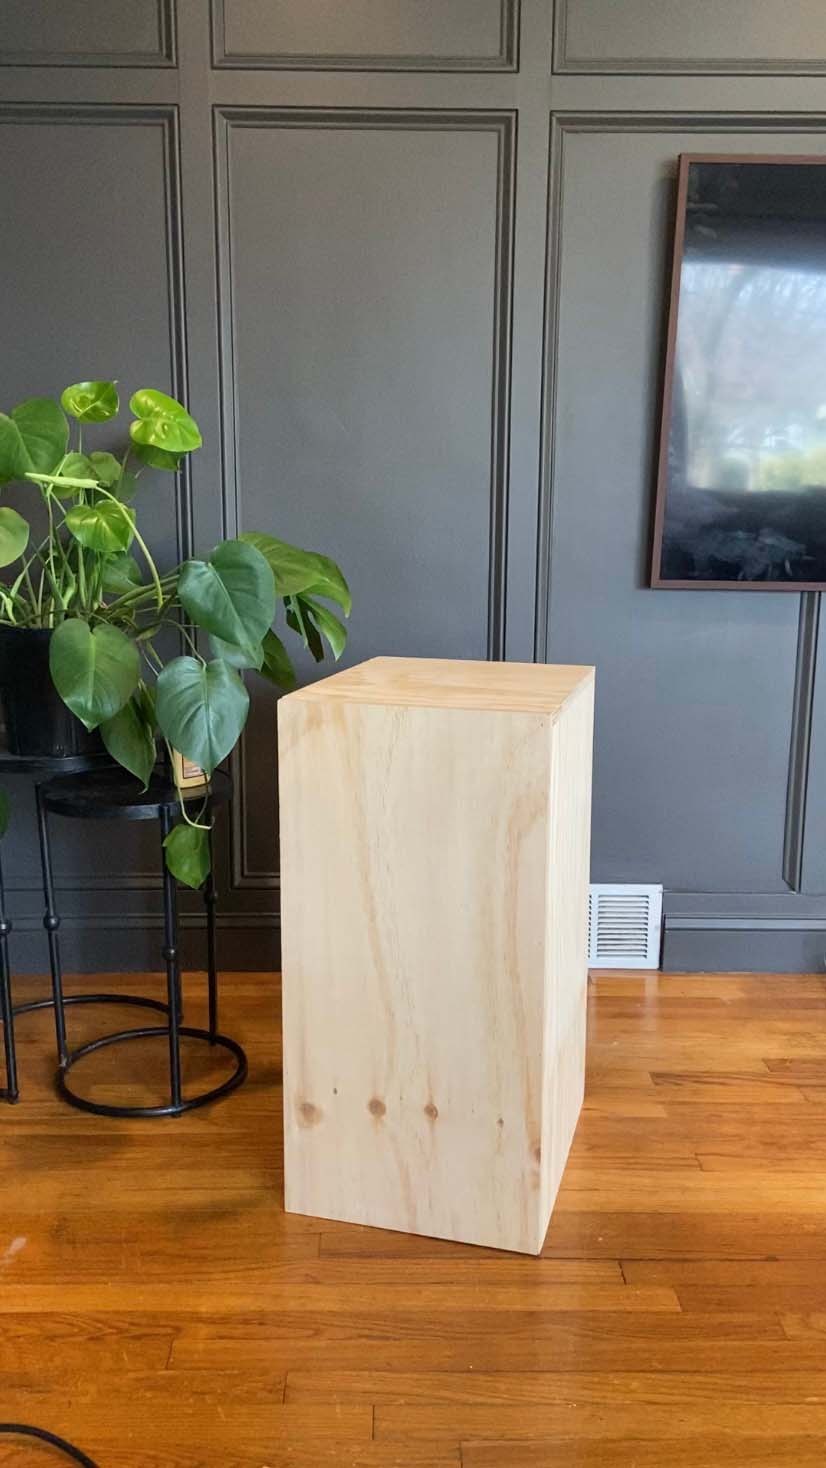 finished box made of wood